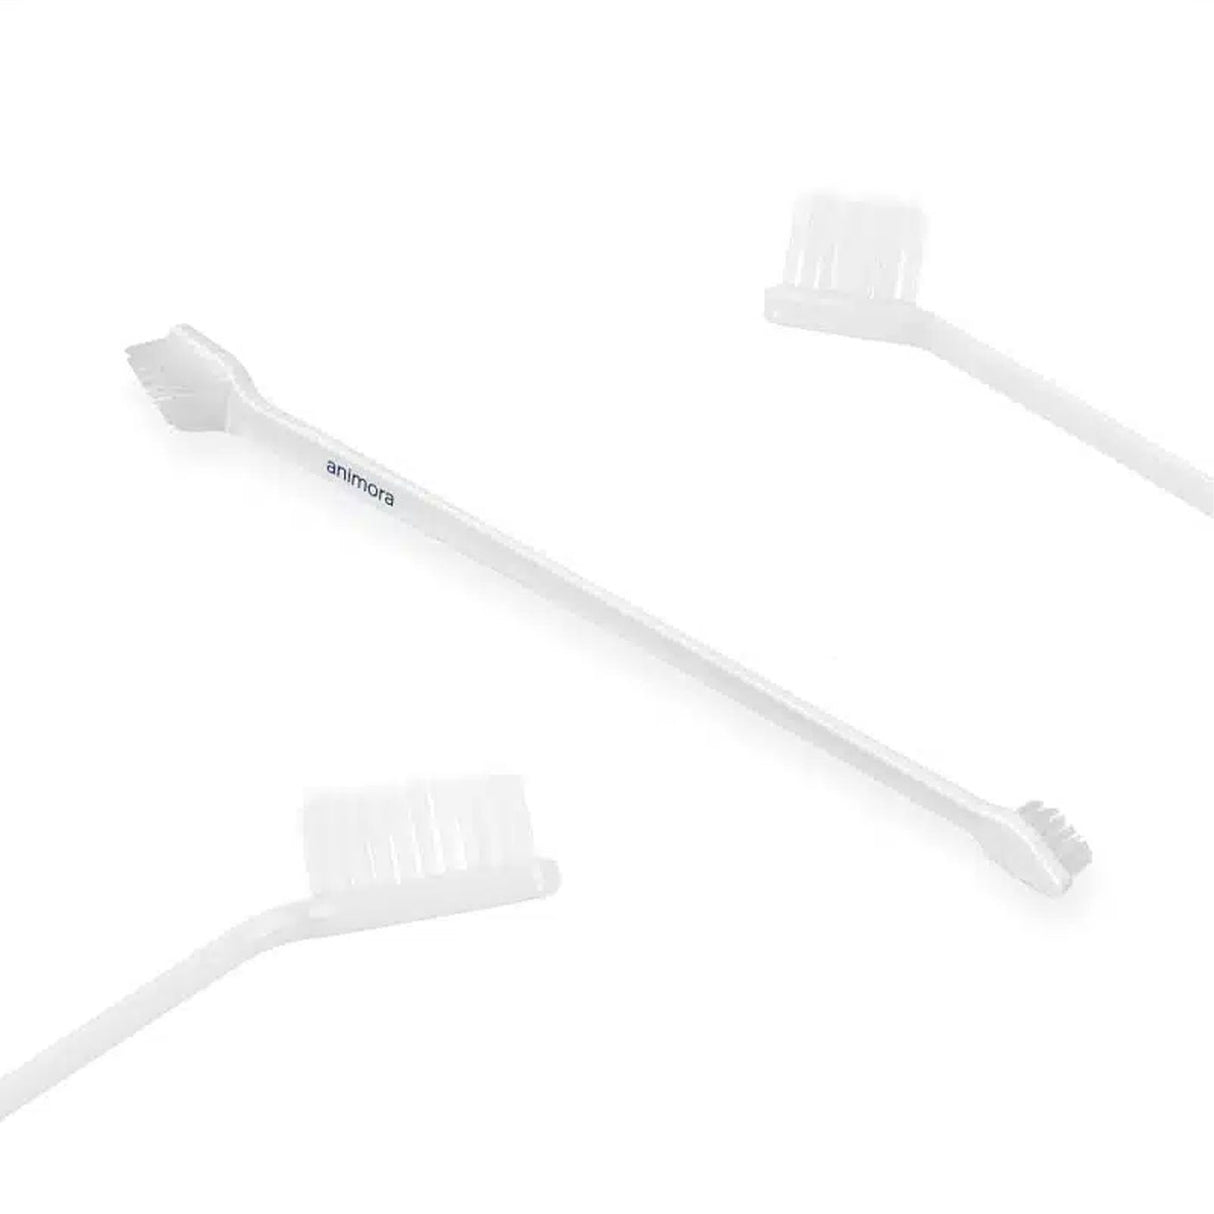 Animora Double-Headed Toothbrush